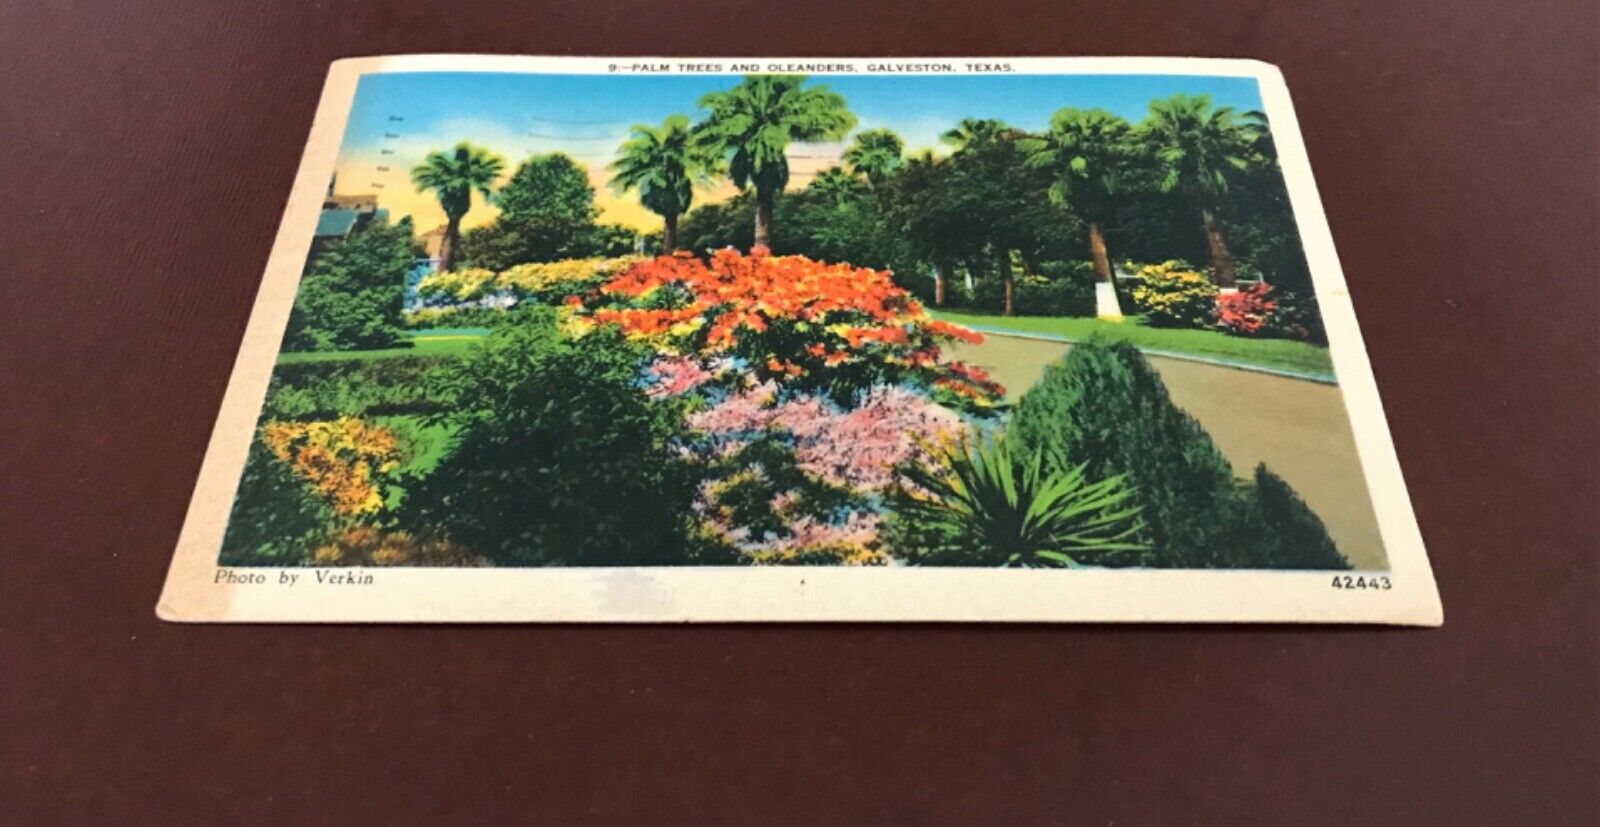 Galveston, Texas 1940 Oleanders and Palm Trees VTG Postcard